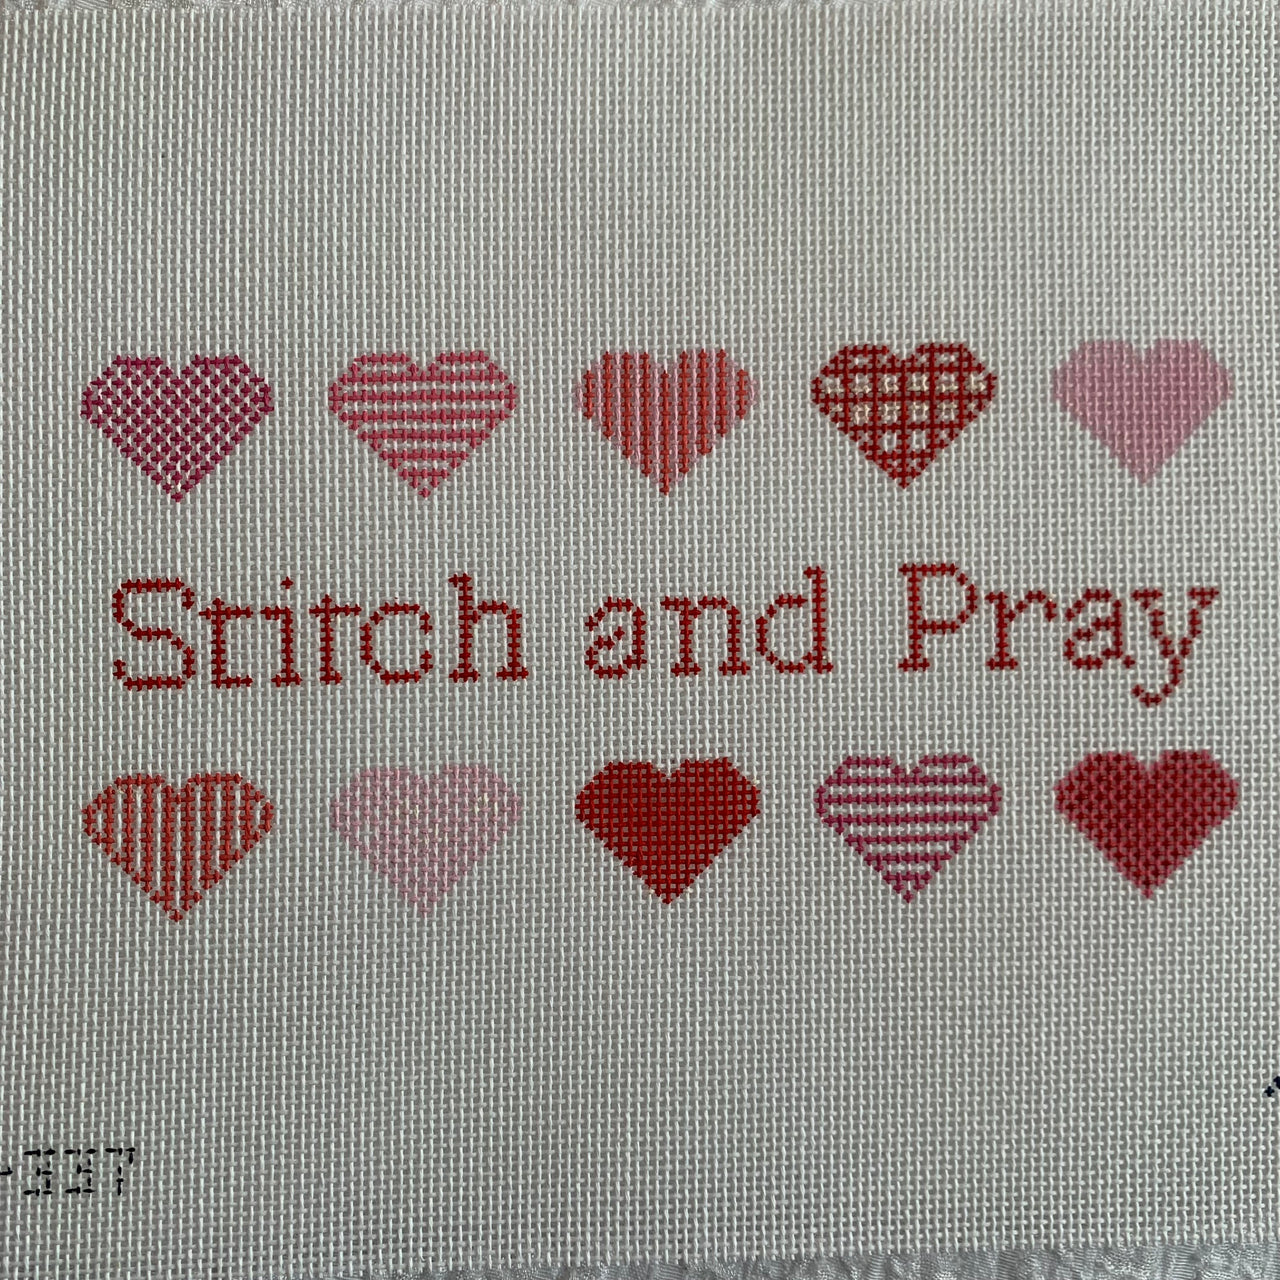 24-337 Stitch & Pray